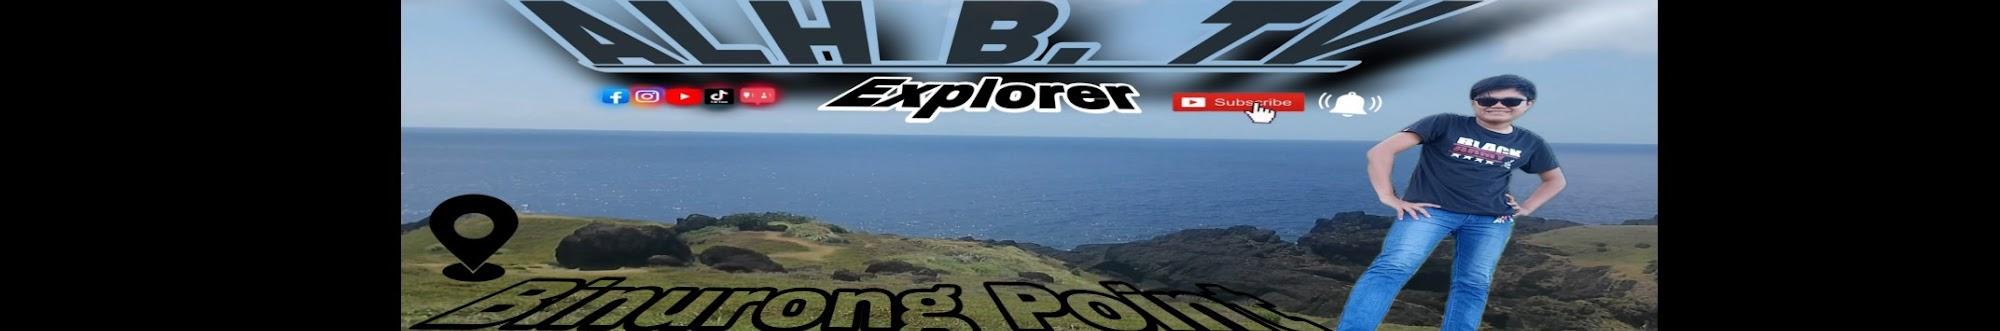 ALH B. TV ( Explorer )